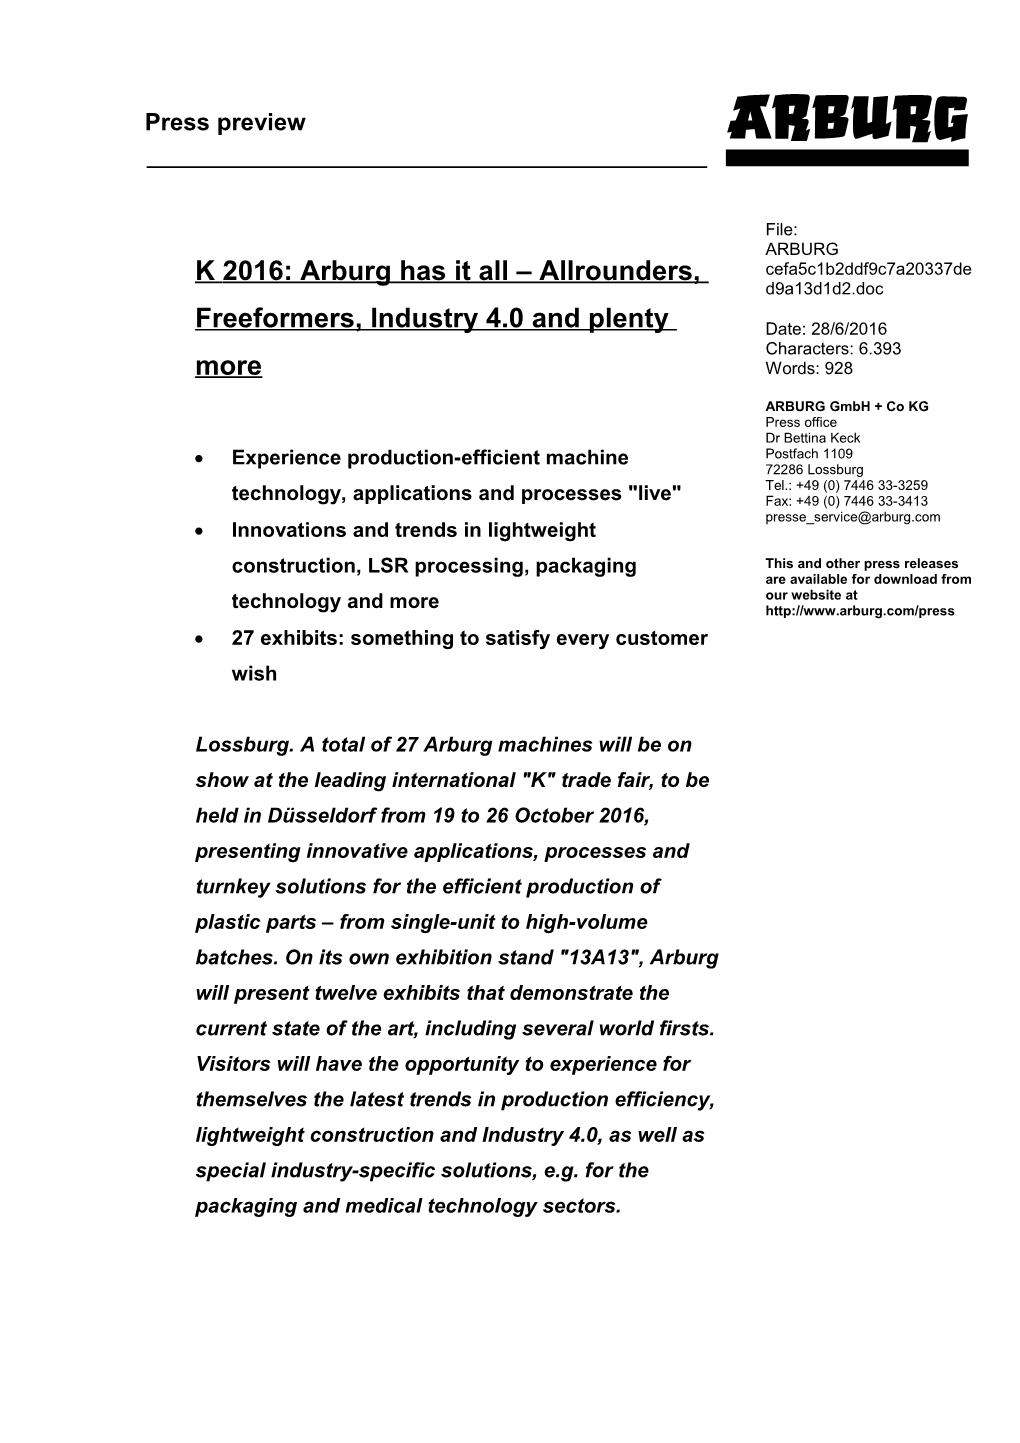 K2016: Arburg Has It All Allrounders, Freeformers, Industry 4.0 and Plenty More